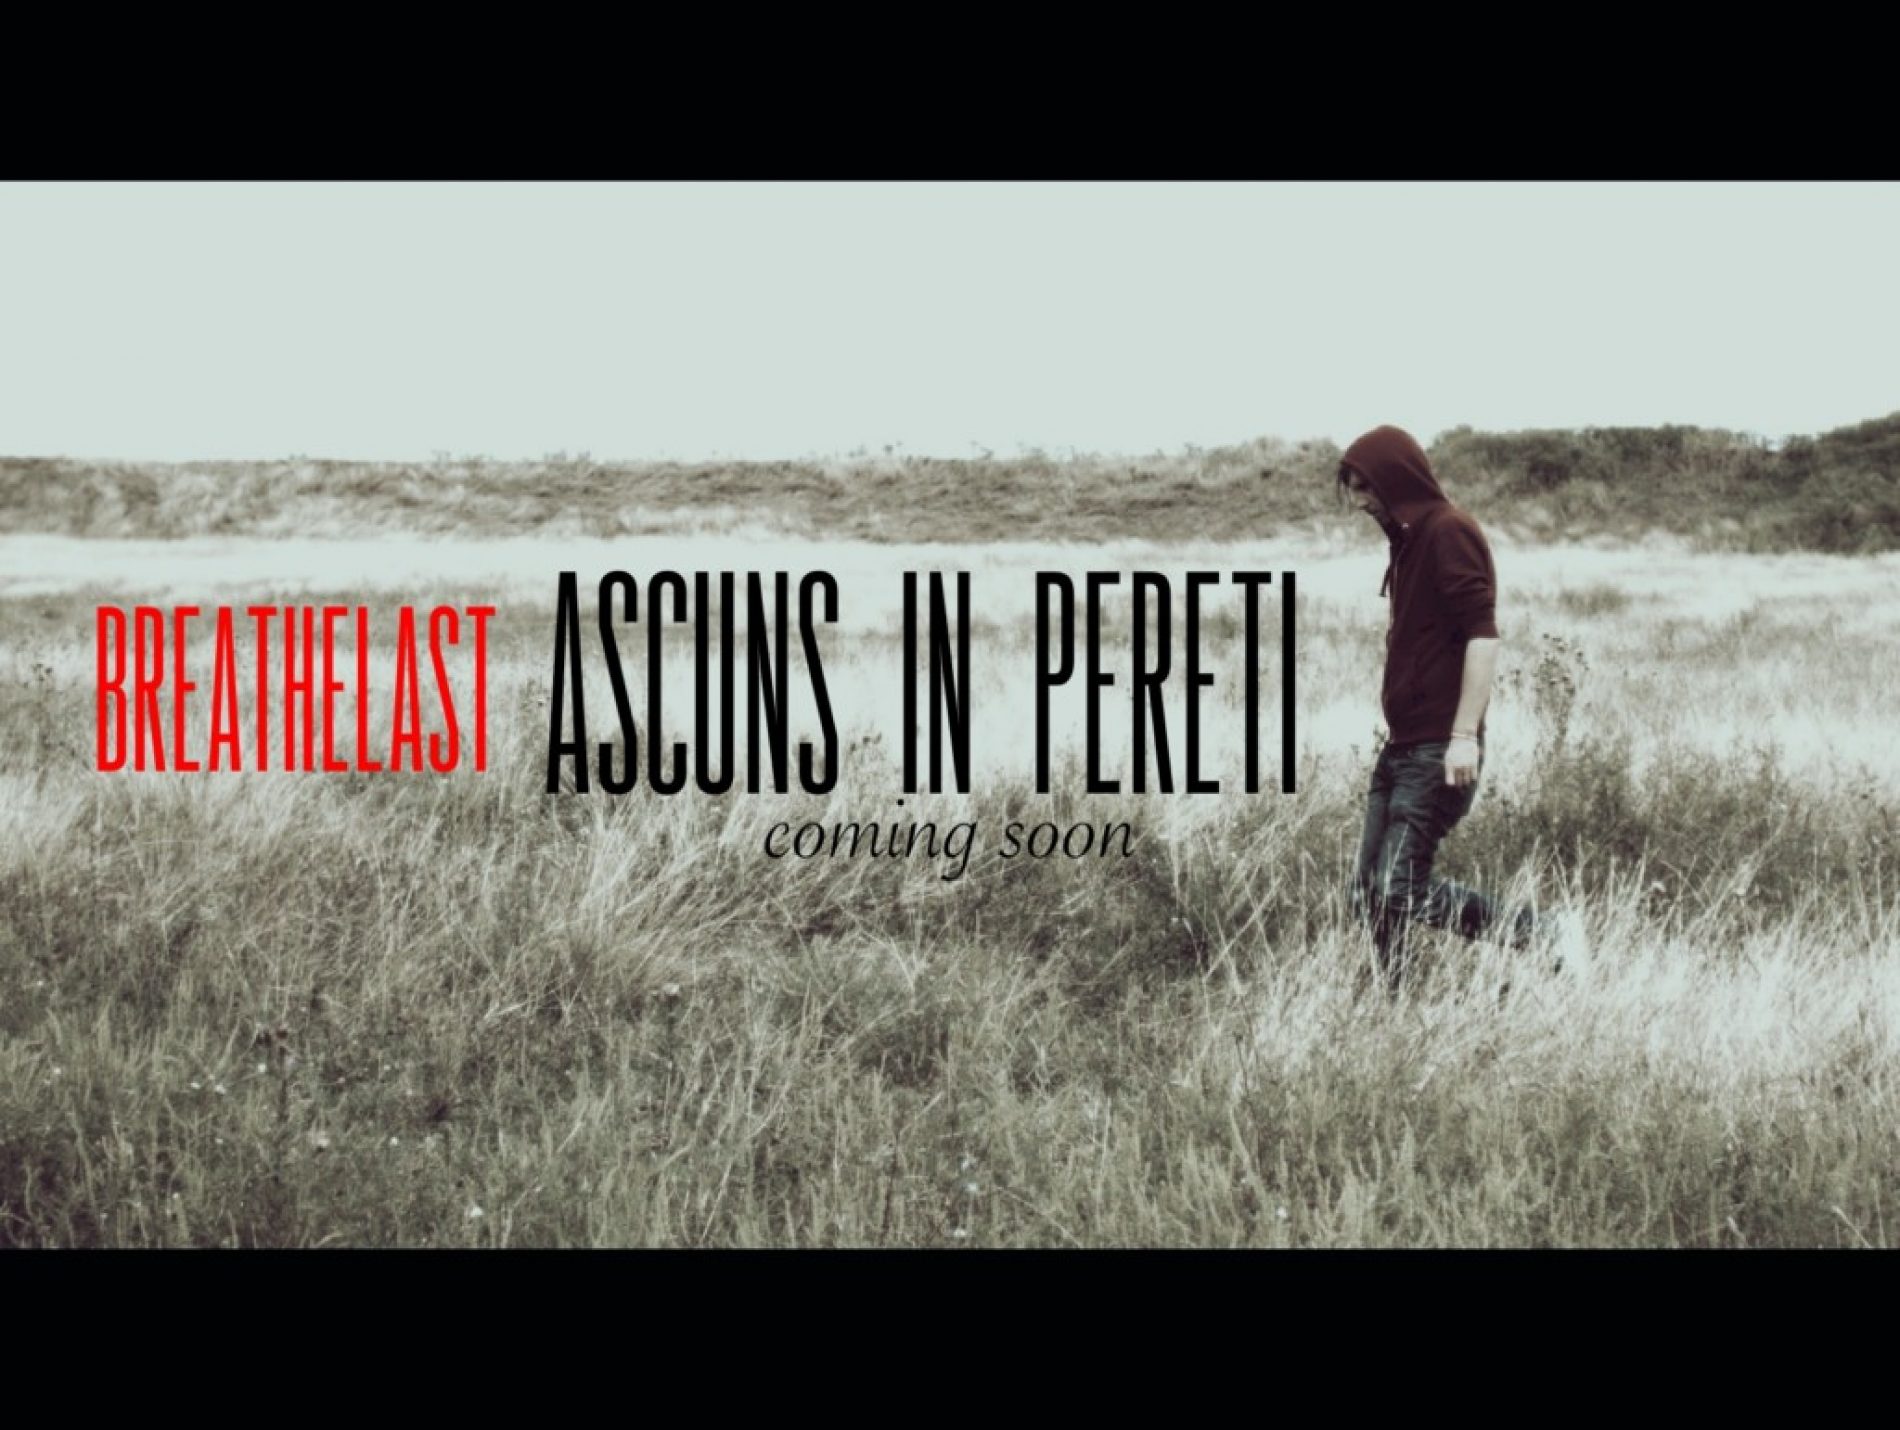 Breathelast: concert lansare single „Ascuns in pereti”